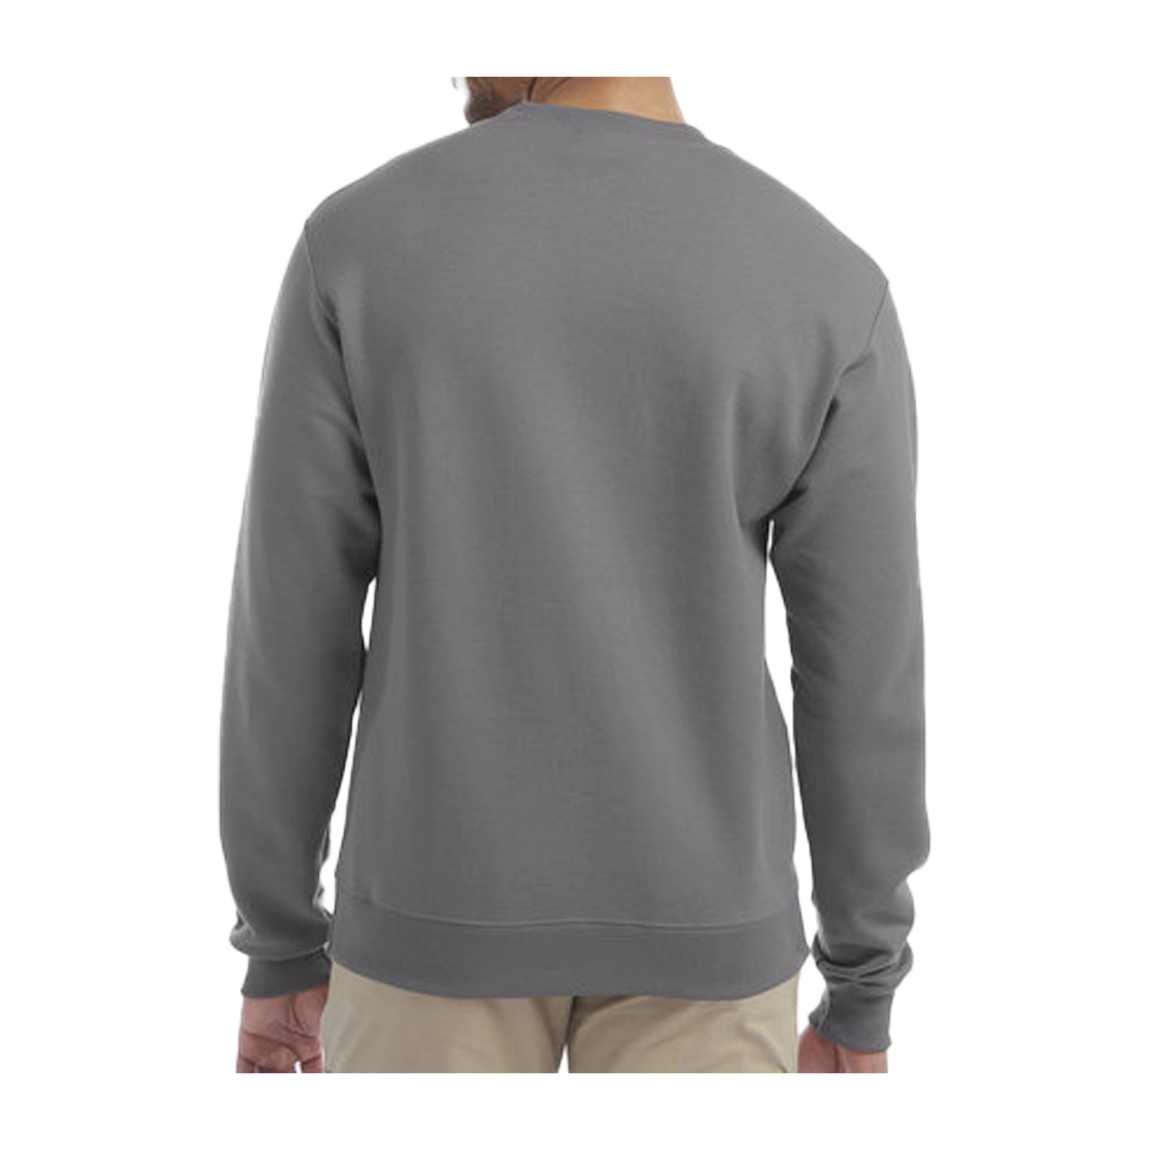 Champion Adult Powerblend® Crewneck Sweatshirt